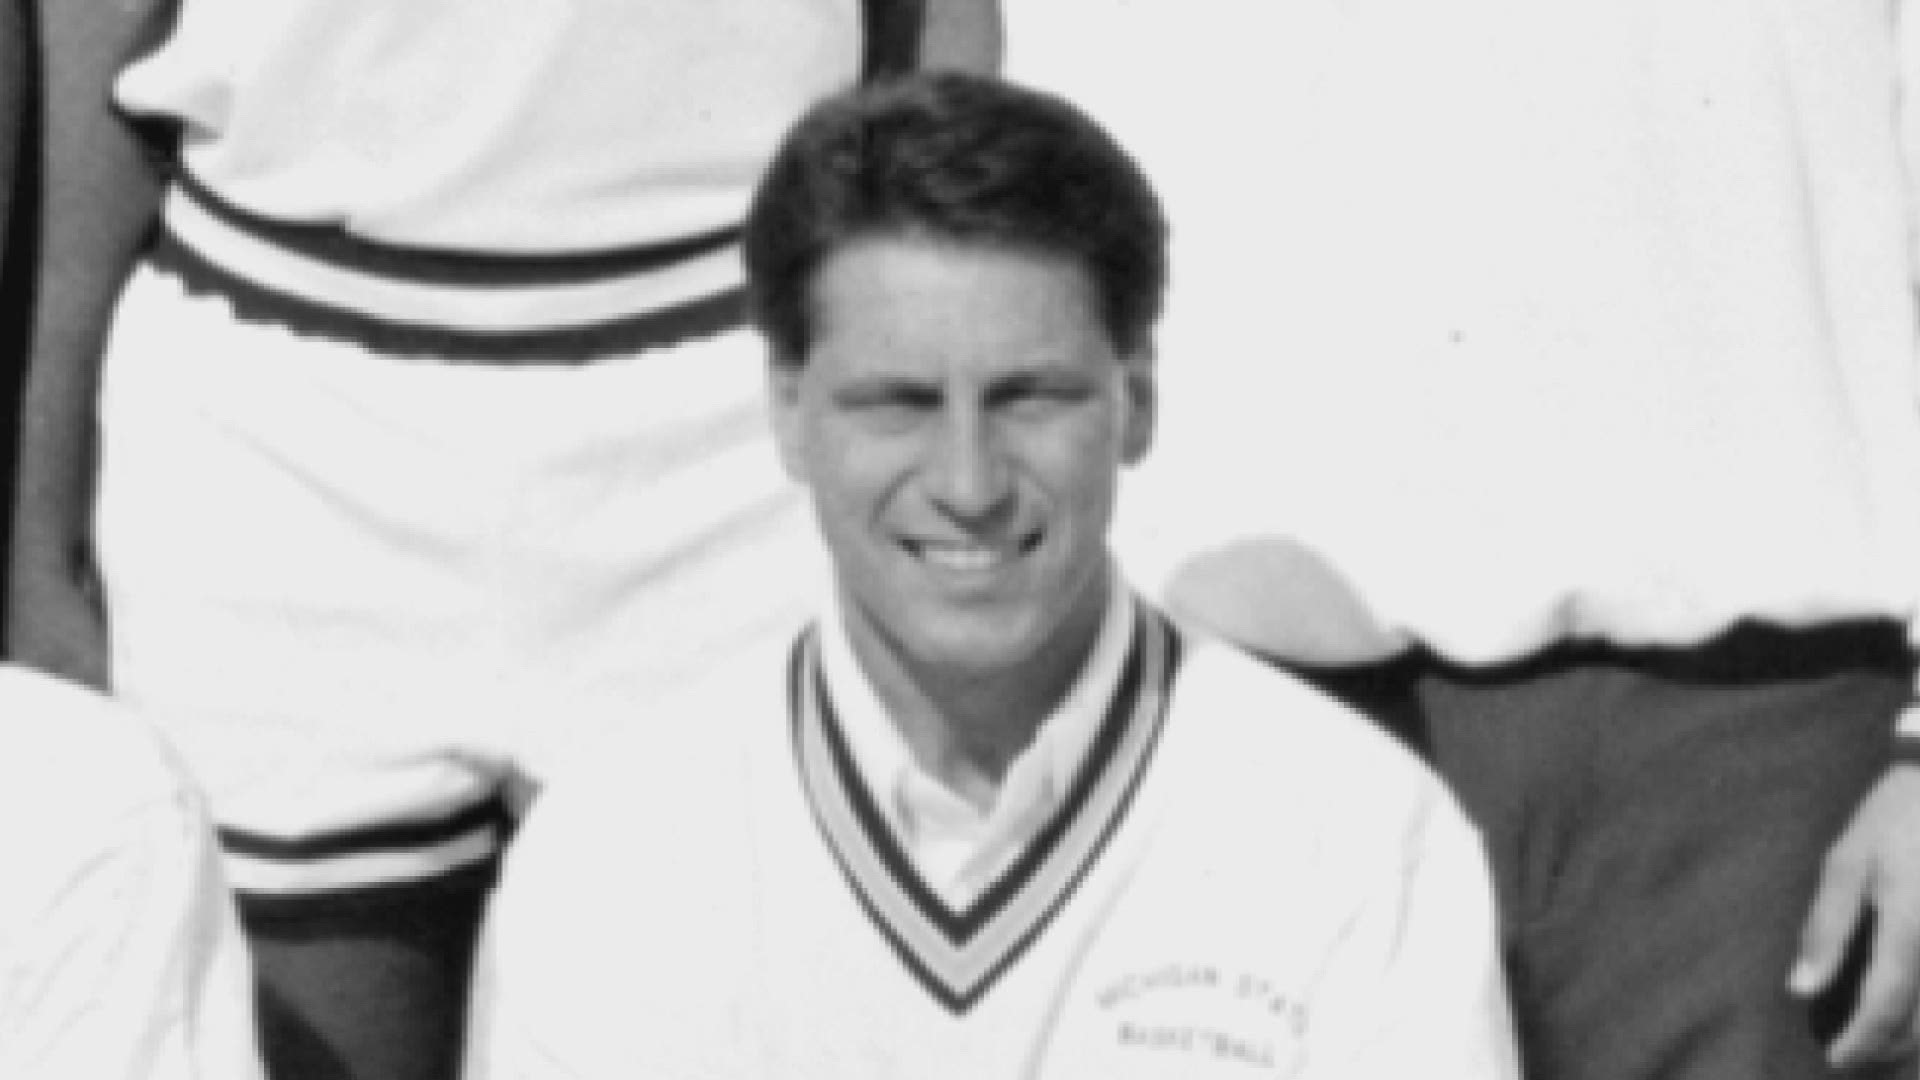 In 1989, MSU head coach Tom Izzo, Georgia coach Tom Crean, and Chicago Bulls head coach Jim Boylen were roommates while working as Spartan assistant coaches.